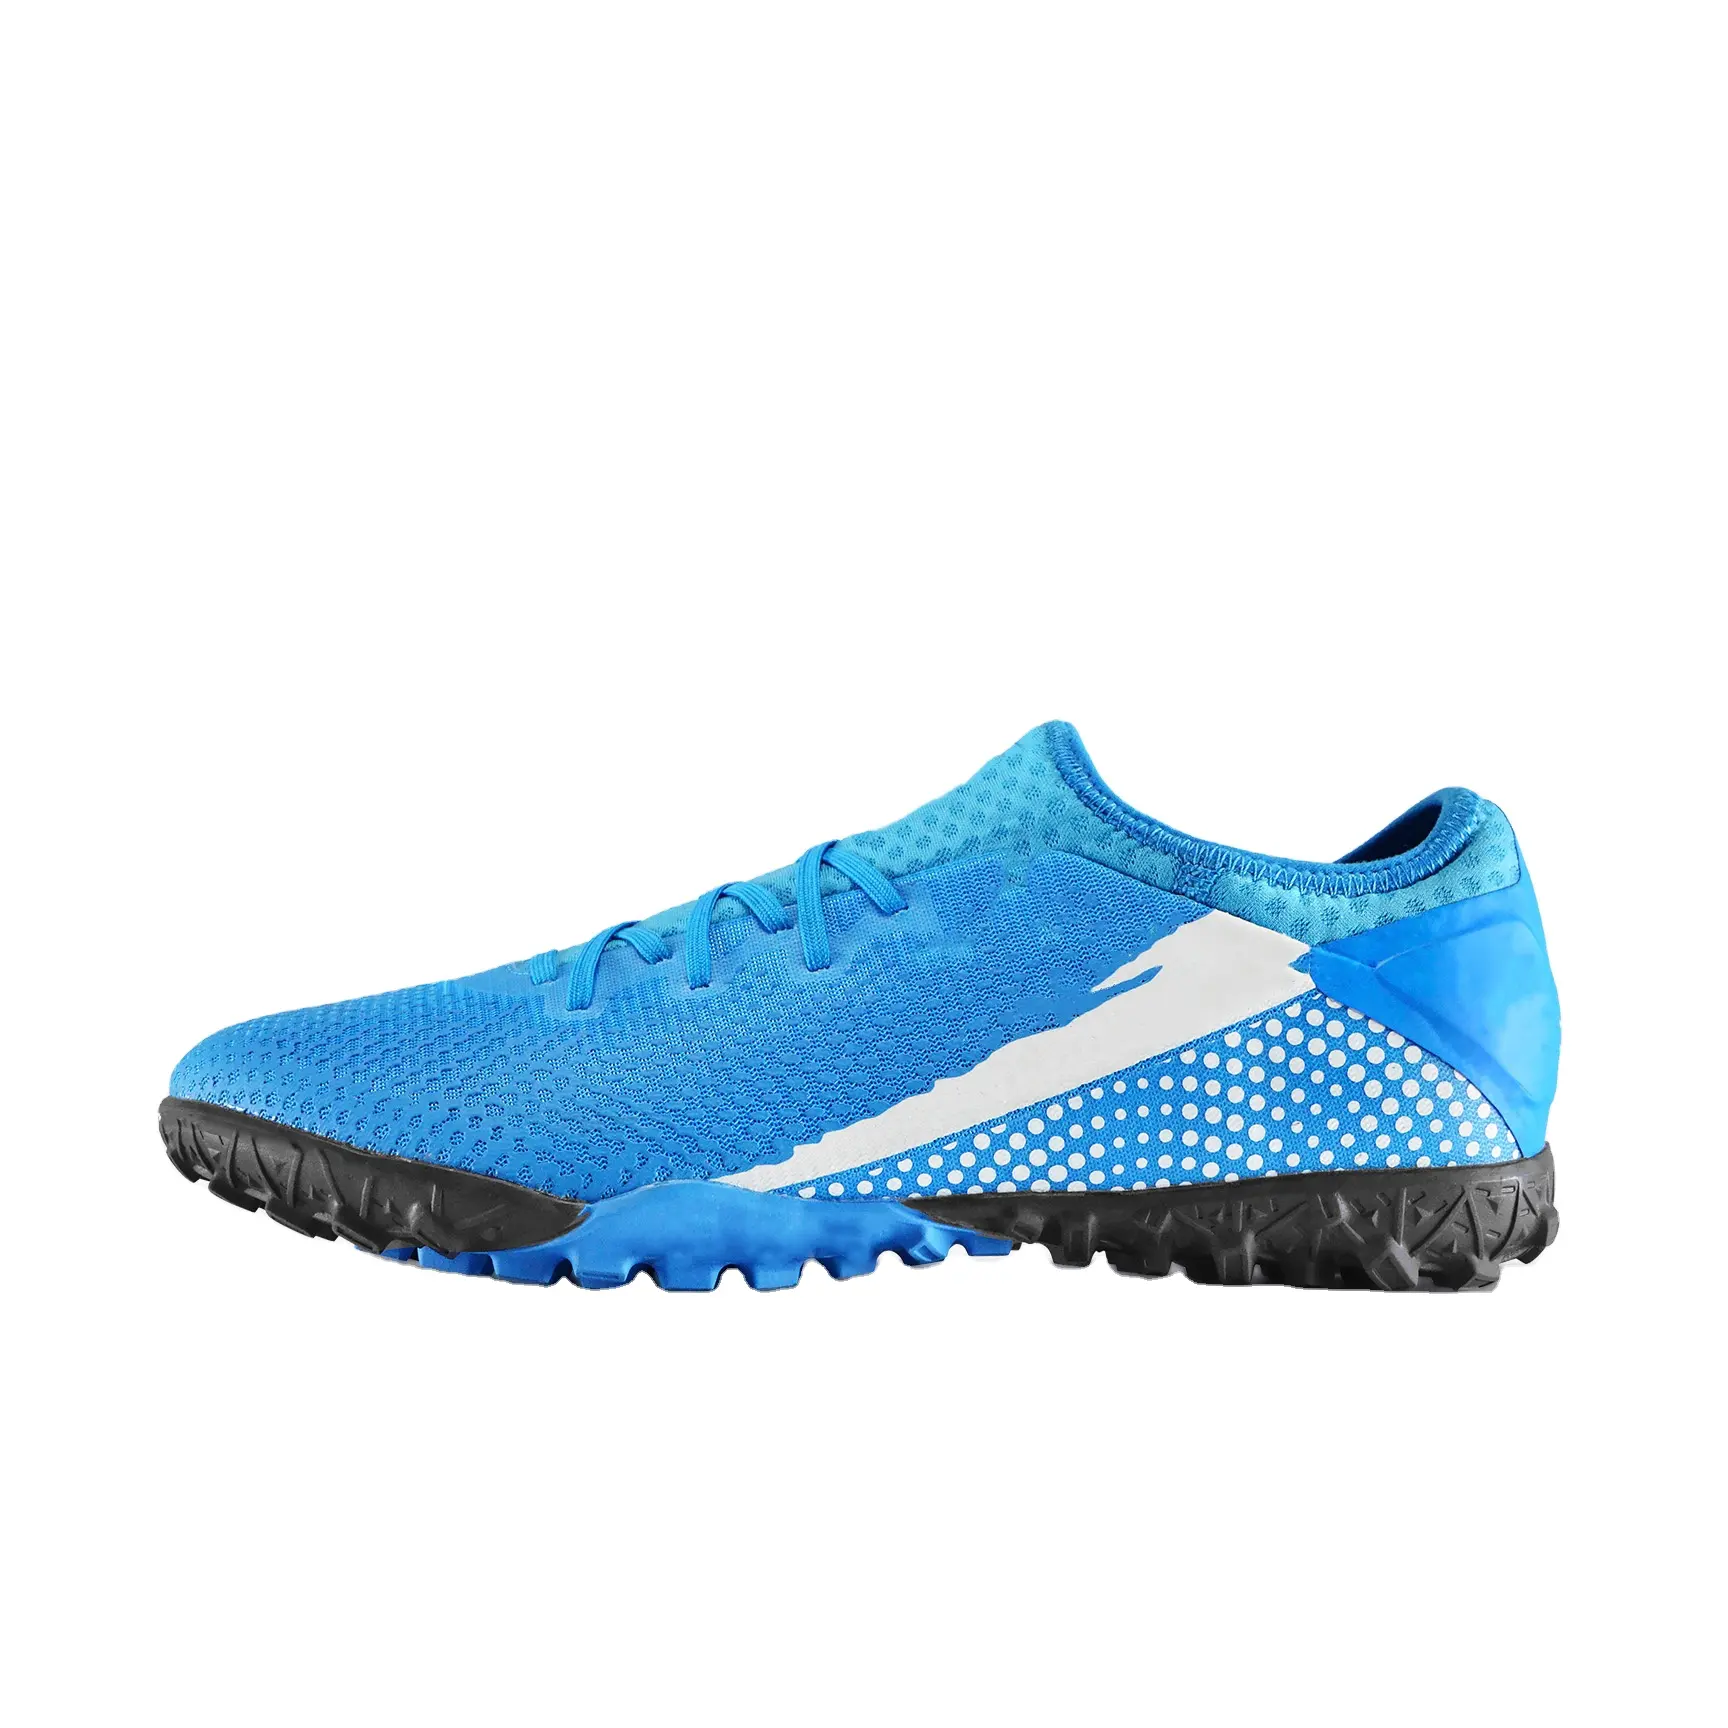 New Arrival Mens Outdoor Football Cleats Artificial Grass Soccer Boots Best Soccer Boots Wide Feet Football Shoes